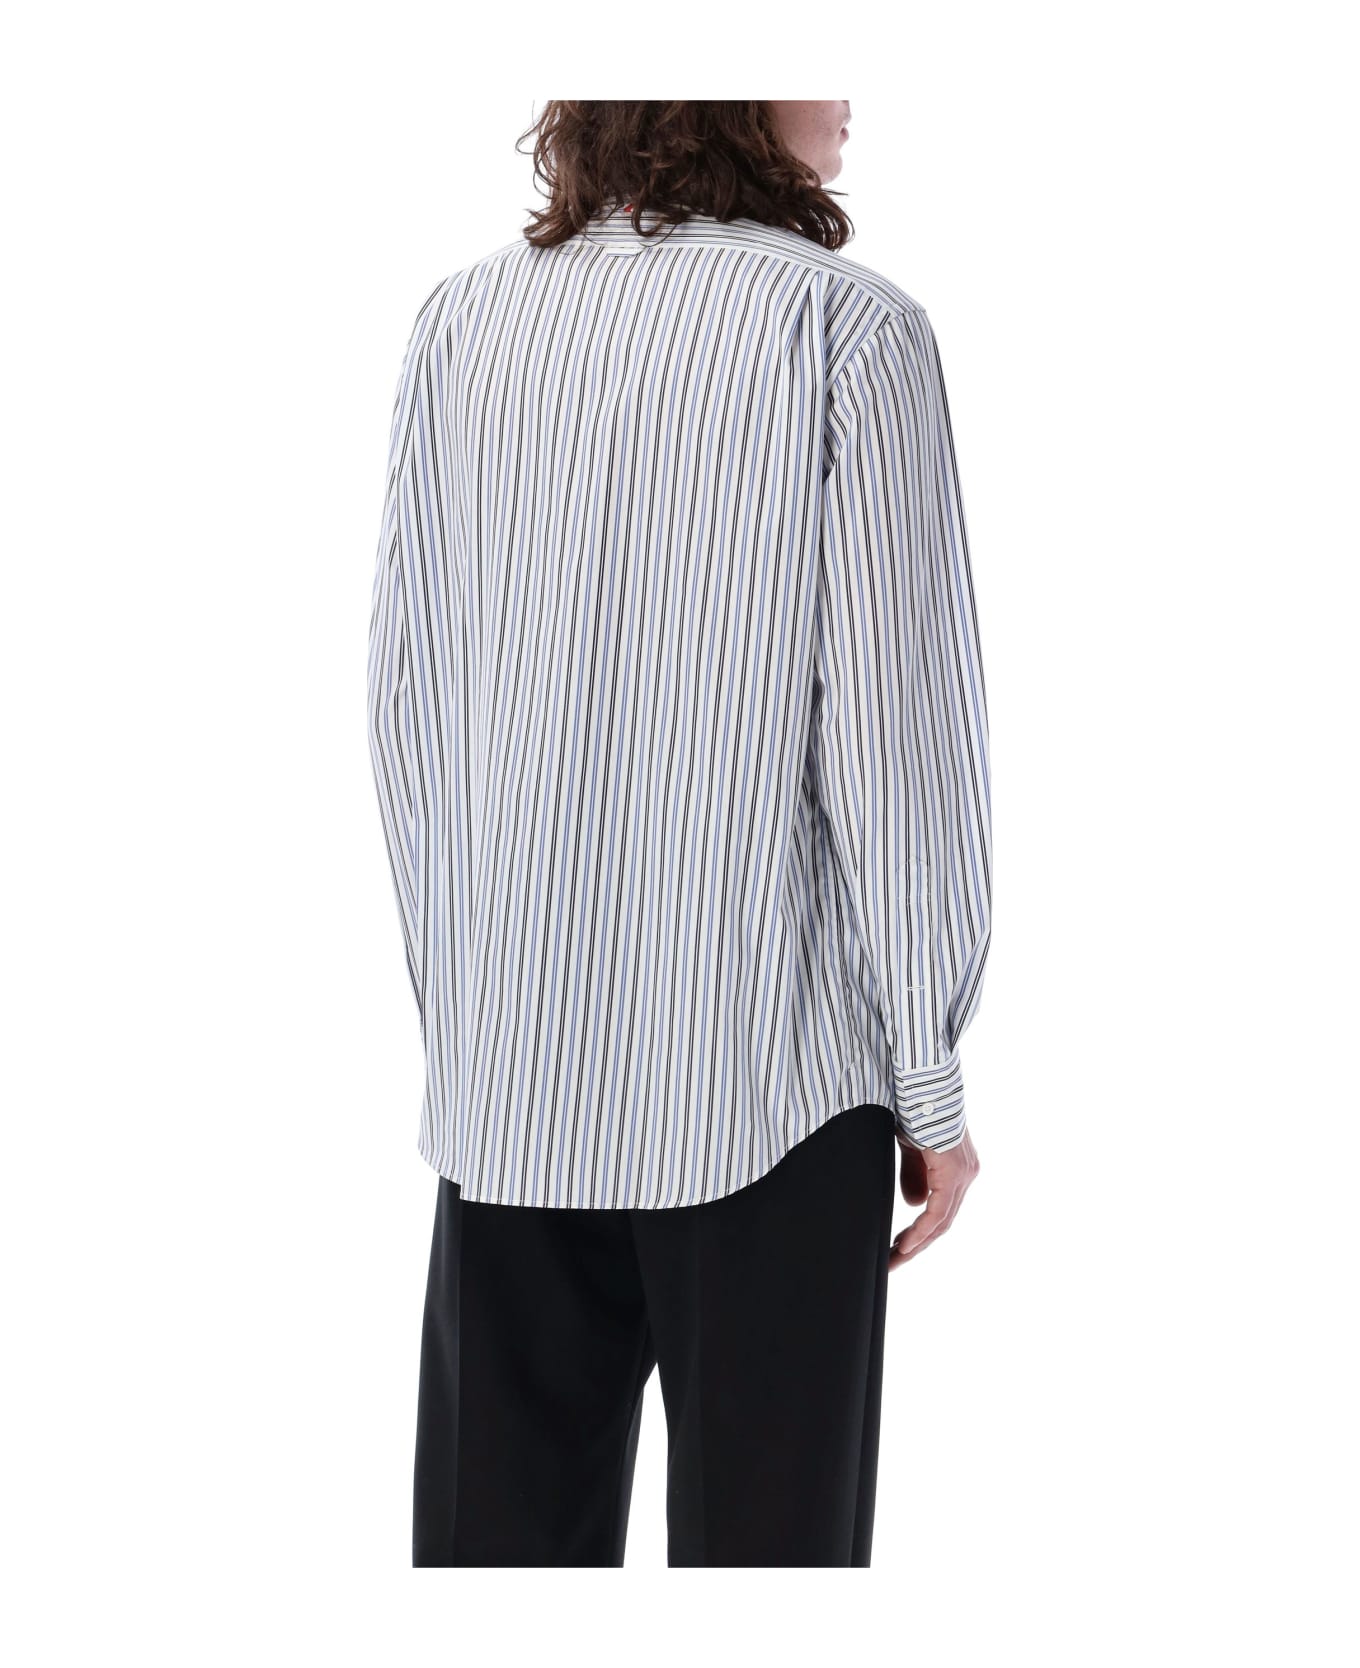 Thom Browne Striped Shirt - NAVY